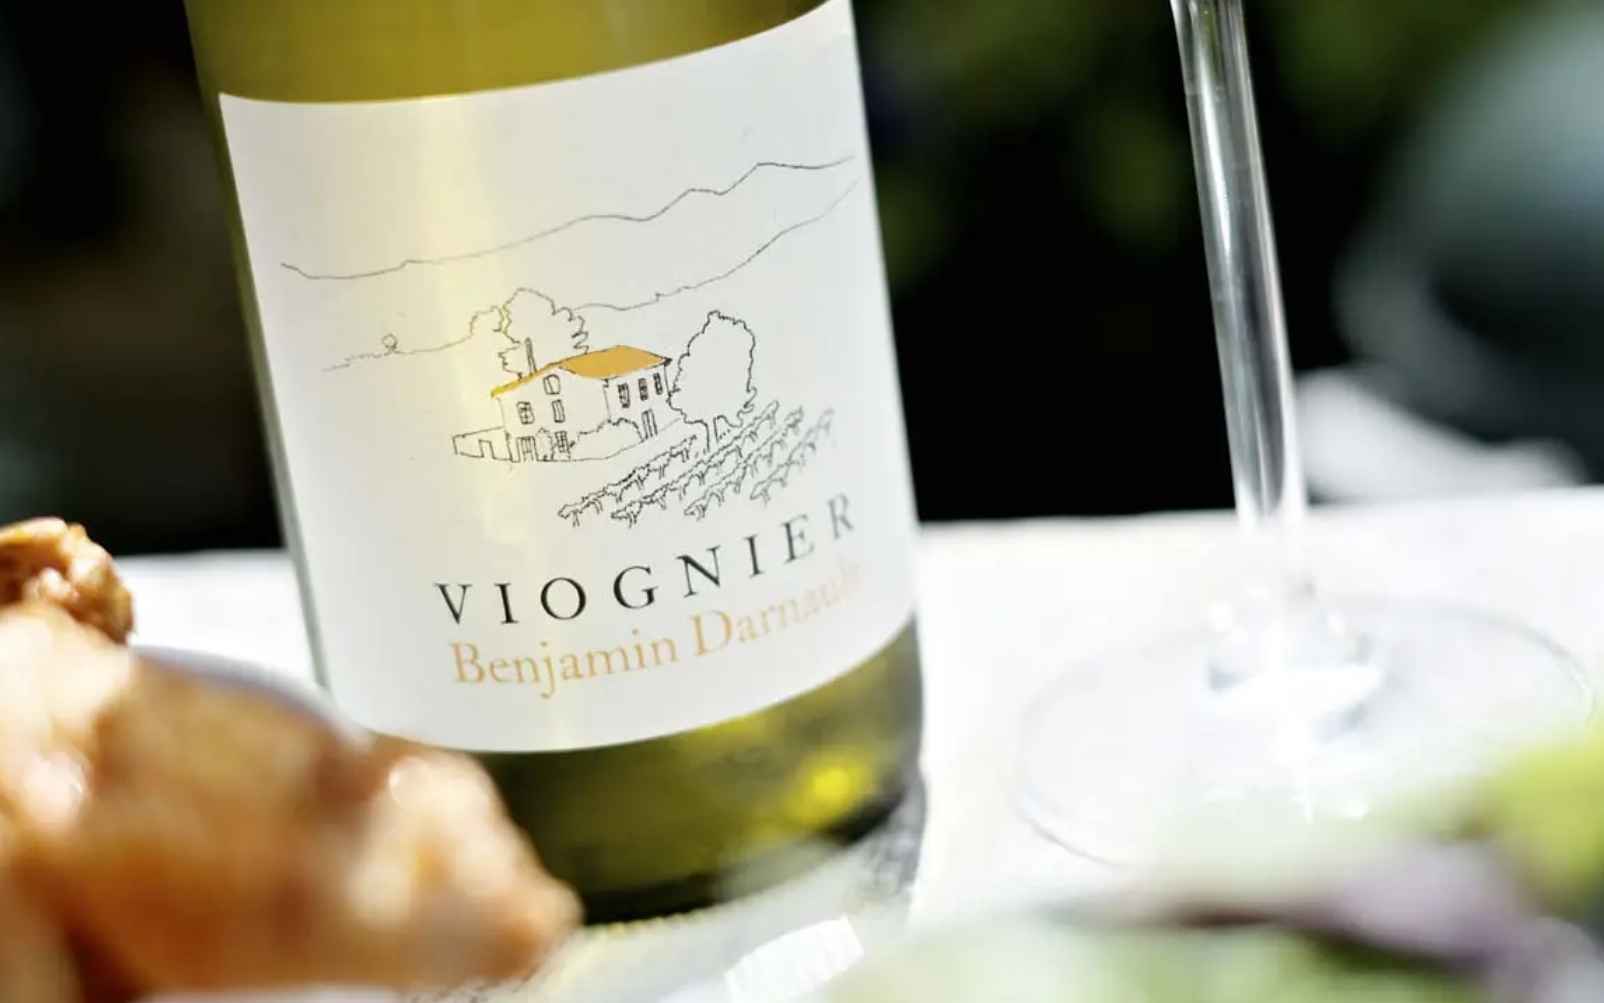 How to buy Viognier wines